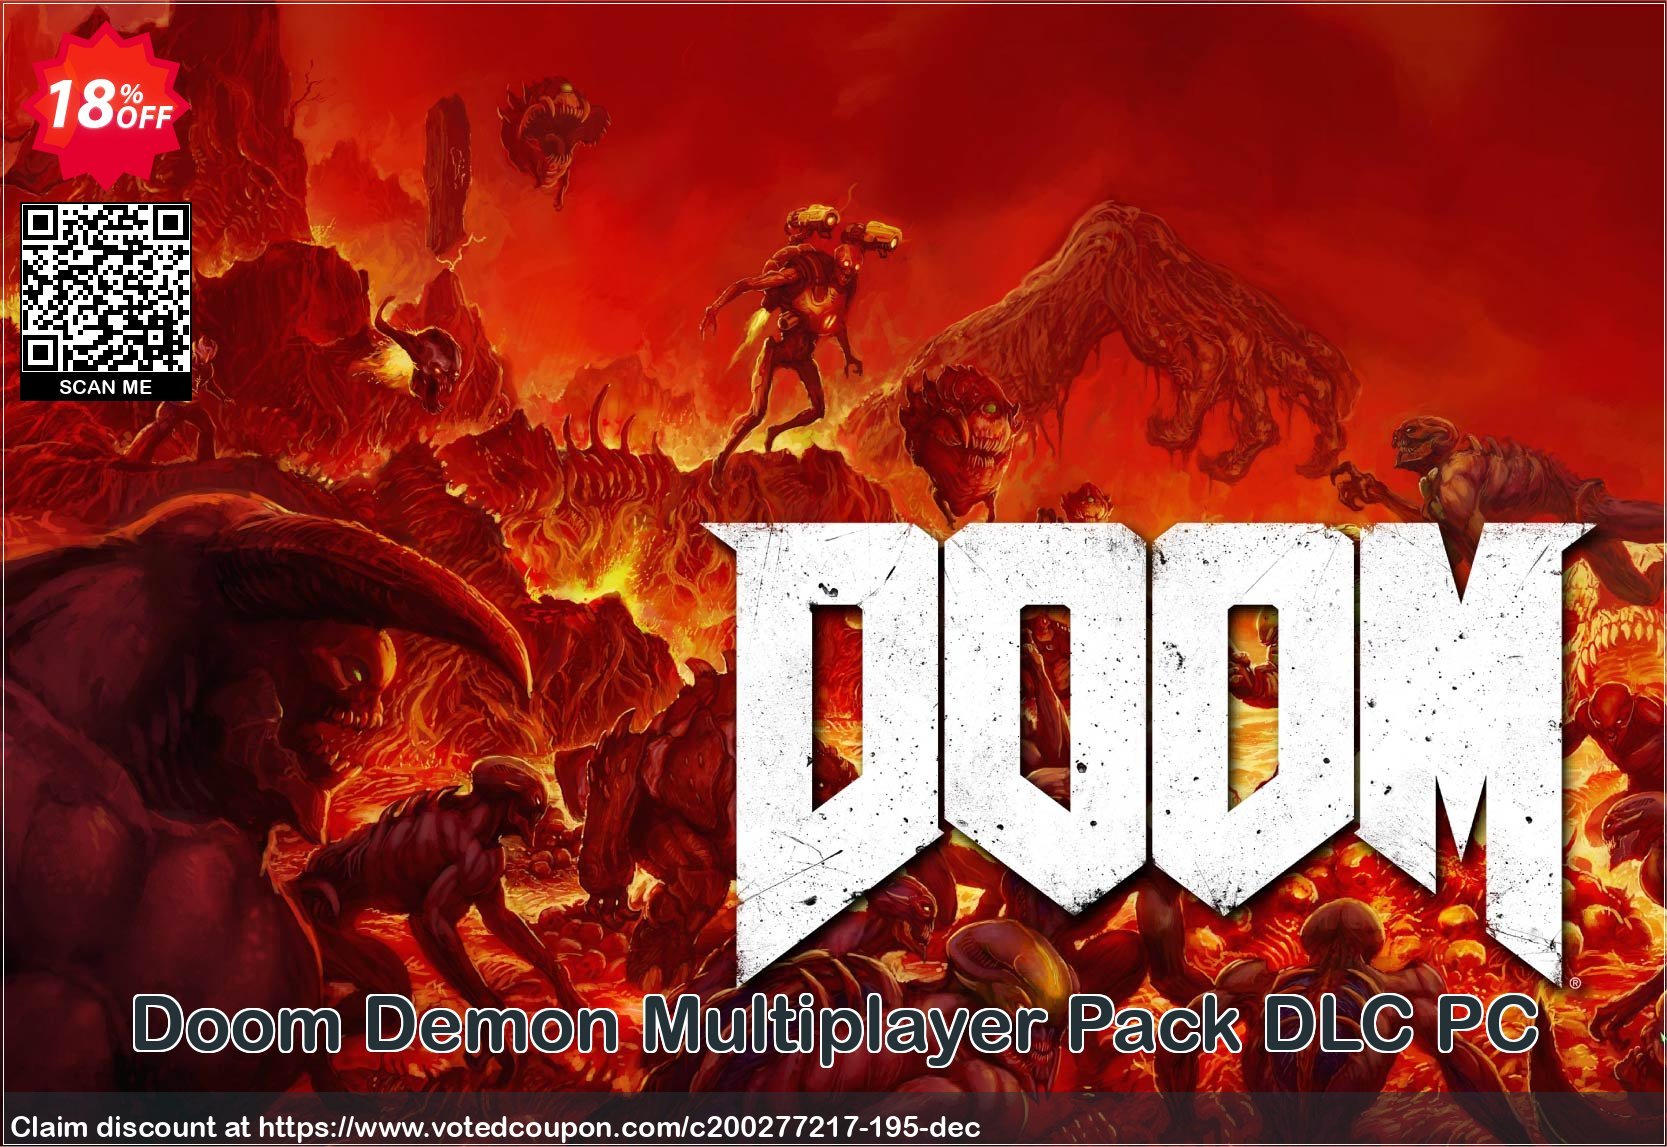 Doom Demon Multiplayer Pack DLC PC Coupon, discount Doom Demon Multiplayer Pack DLC PC Deal. Promotion: Doom Demon Multiplayer Pack DLC PC Exclusive offer 